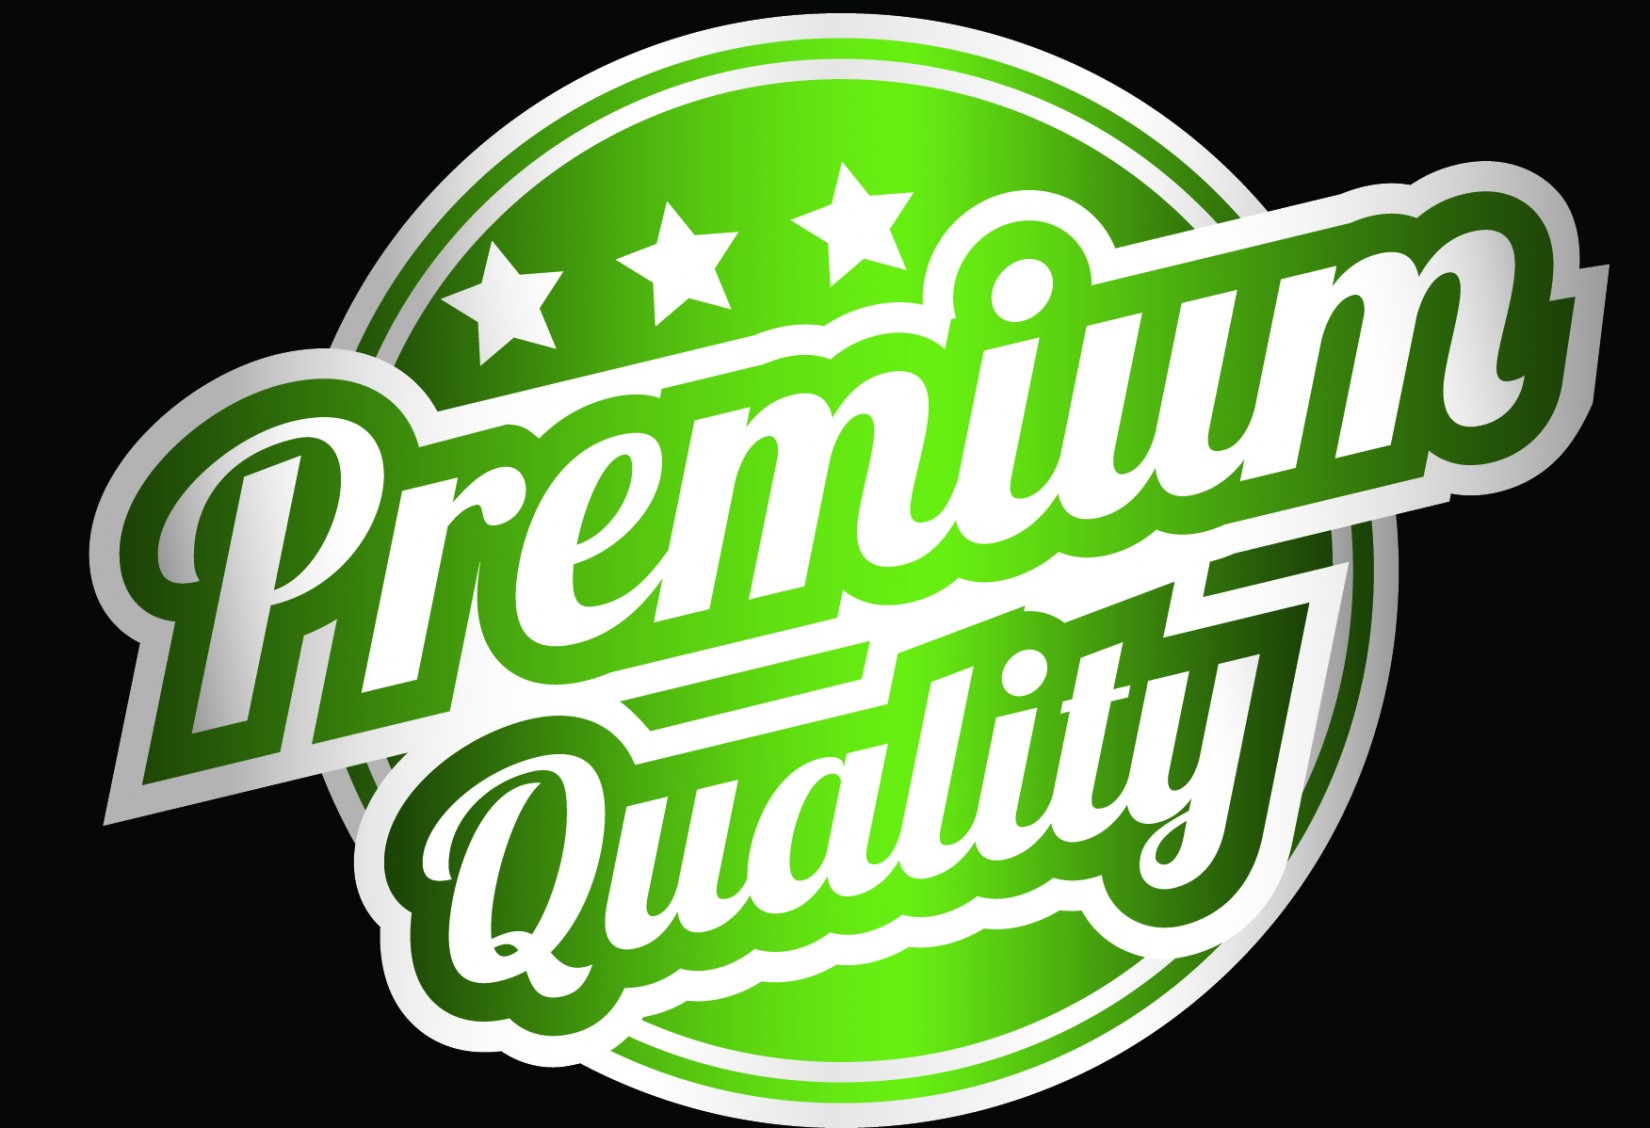 Premium's. Premium. Премиум Куалити. Логотип премиум качество. Европейское качество лого.